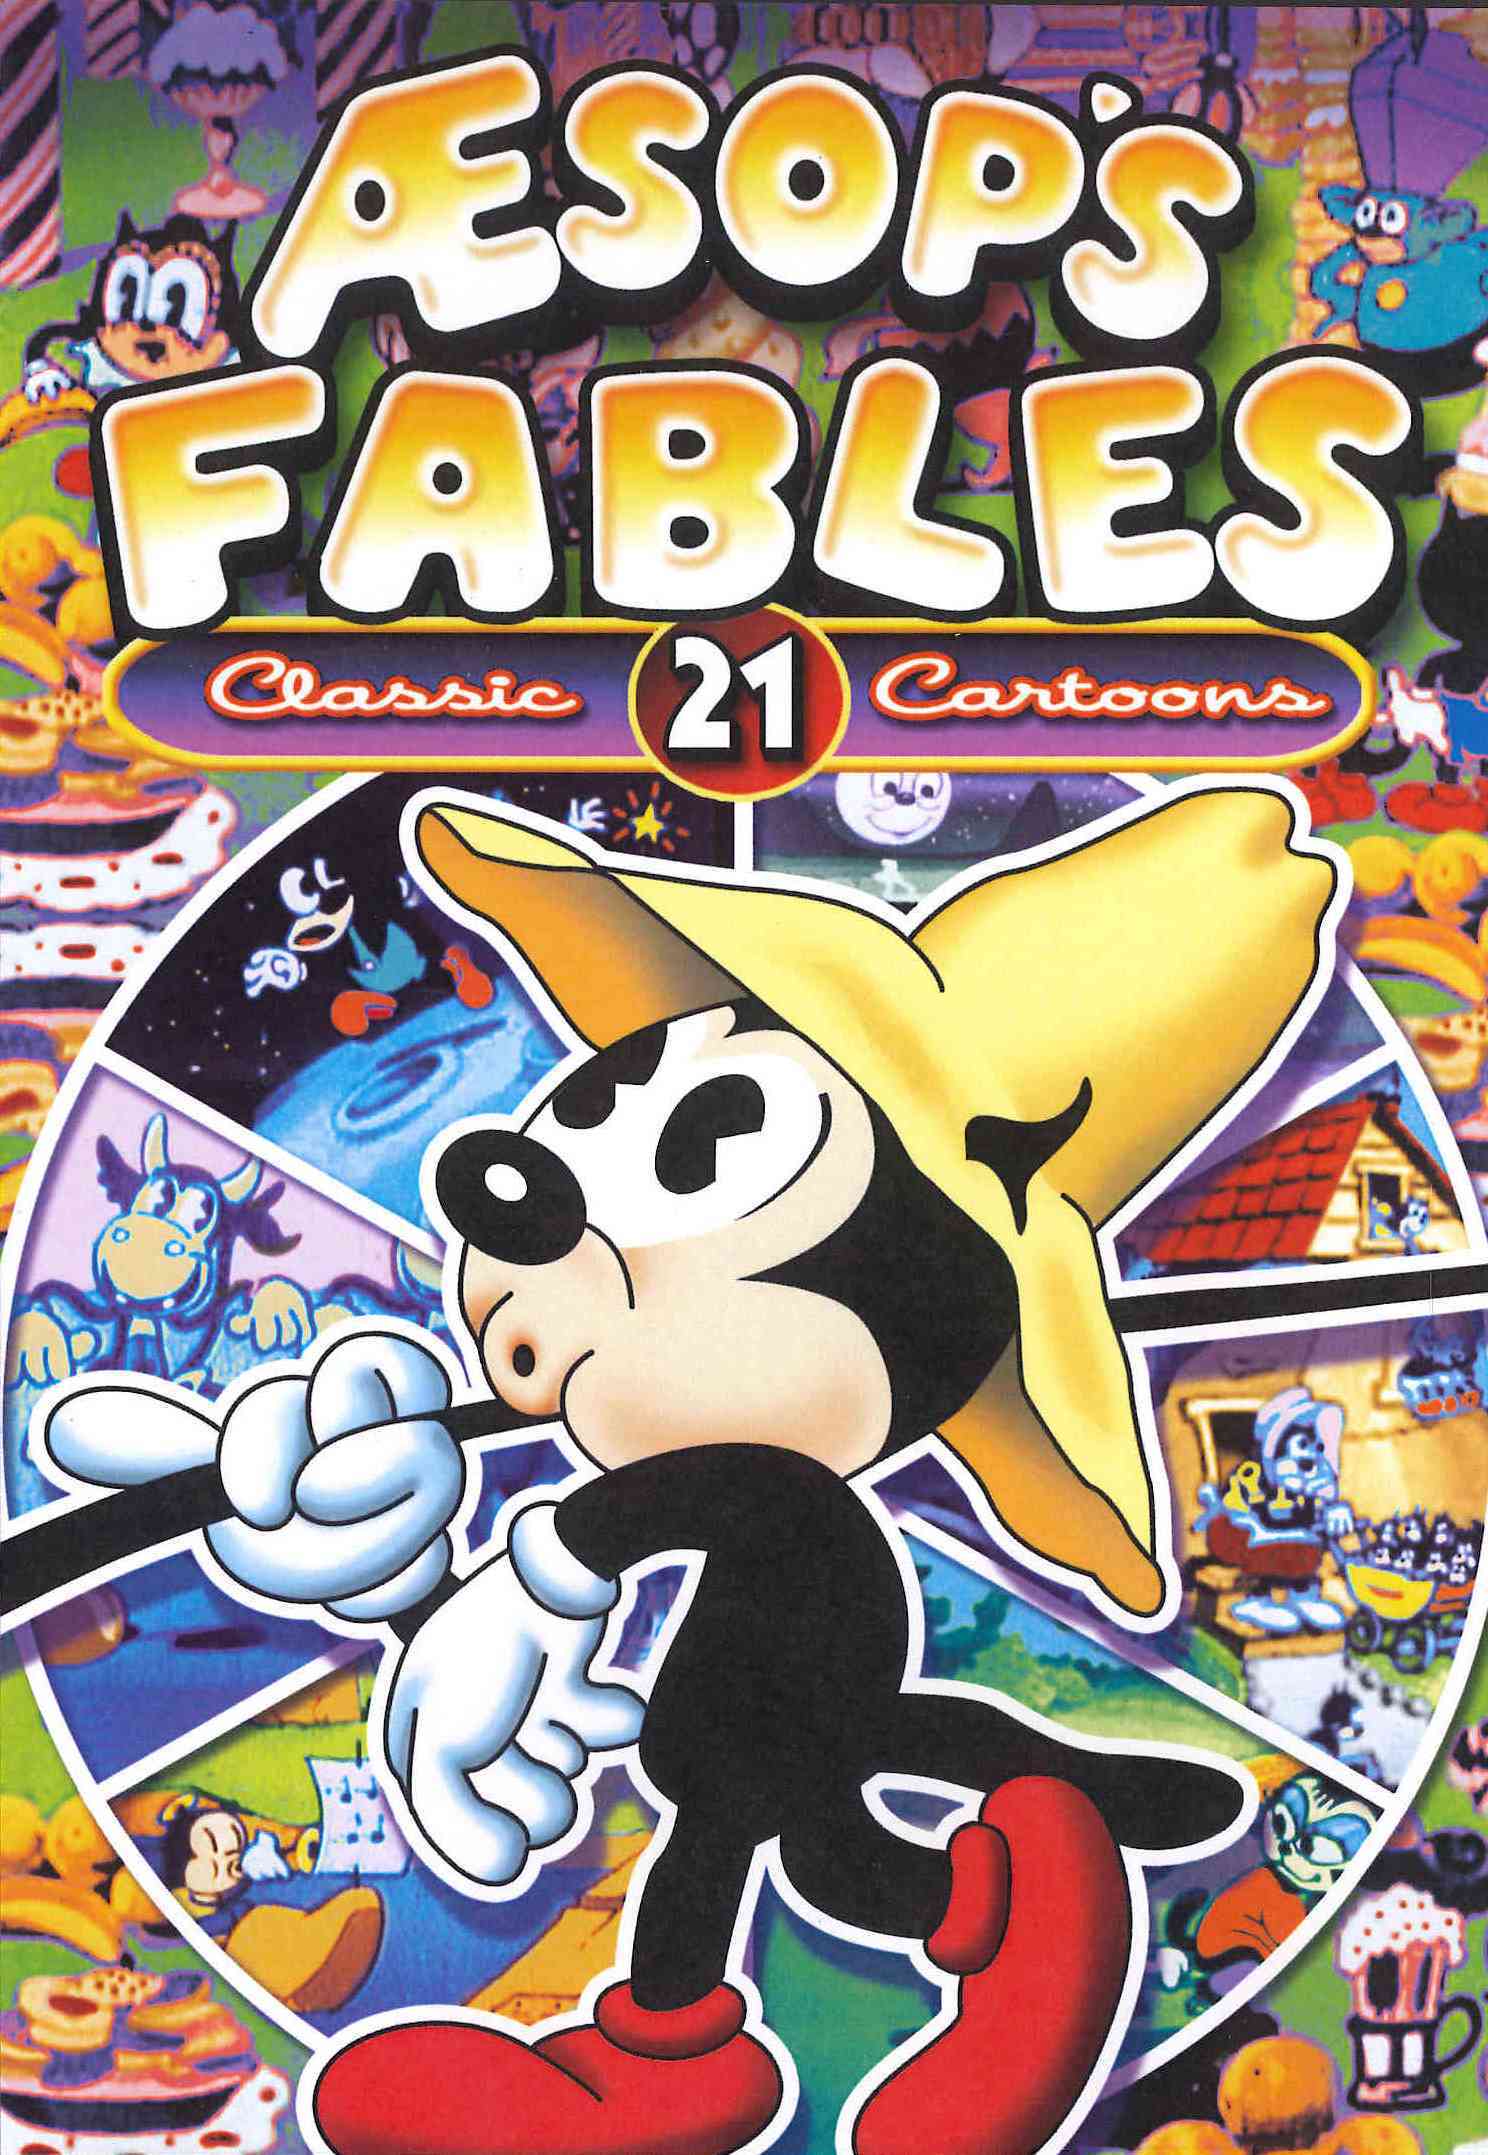 Aesop's Fables: 21 Classic Cartoons cover art